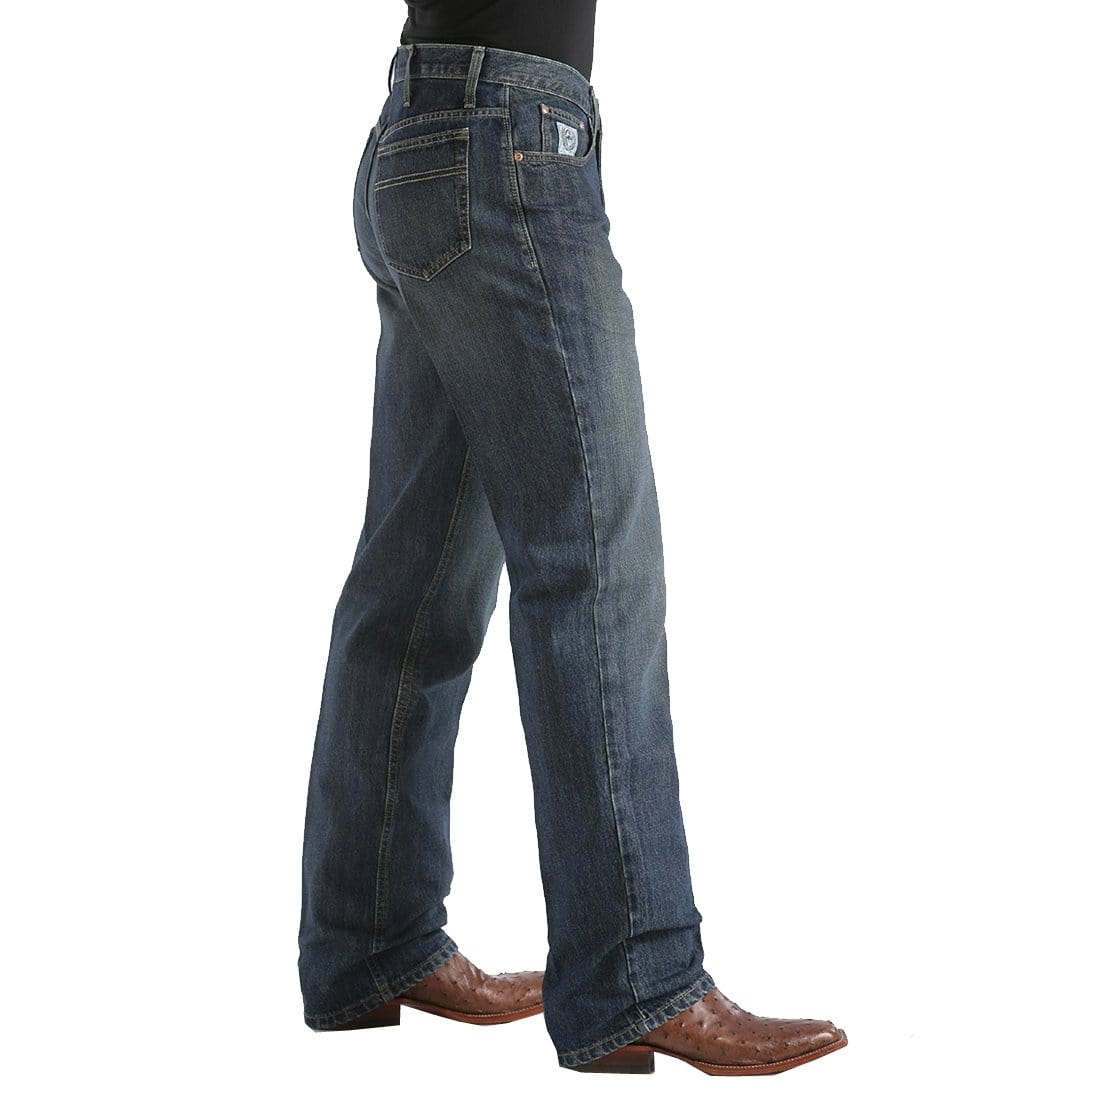 Cinch - Mens White Label Jeans MB92834013 - Dark Stonewash (34 Leg Length)